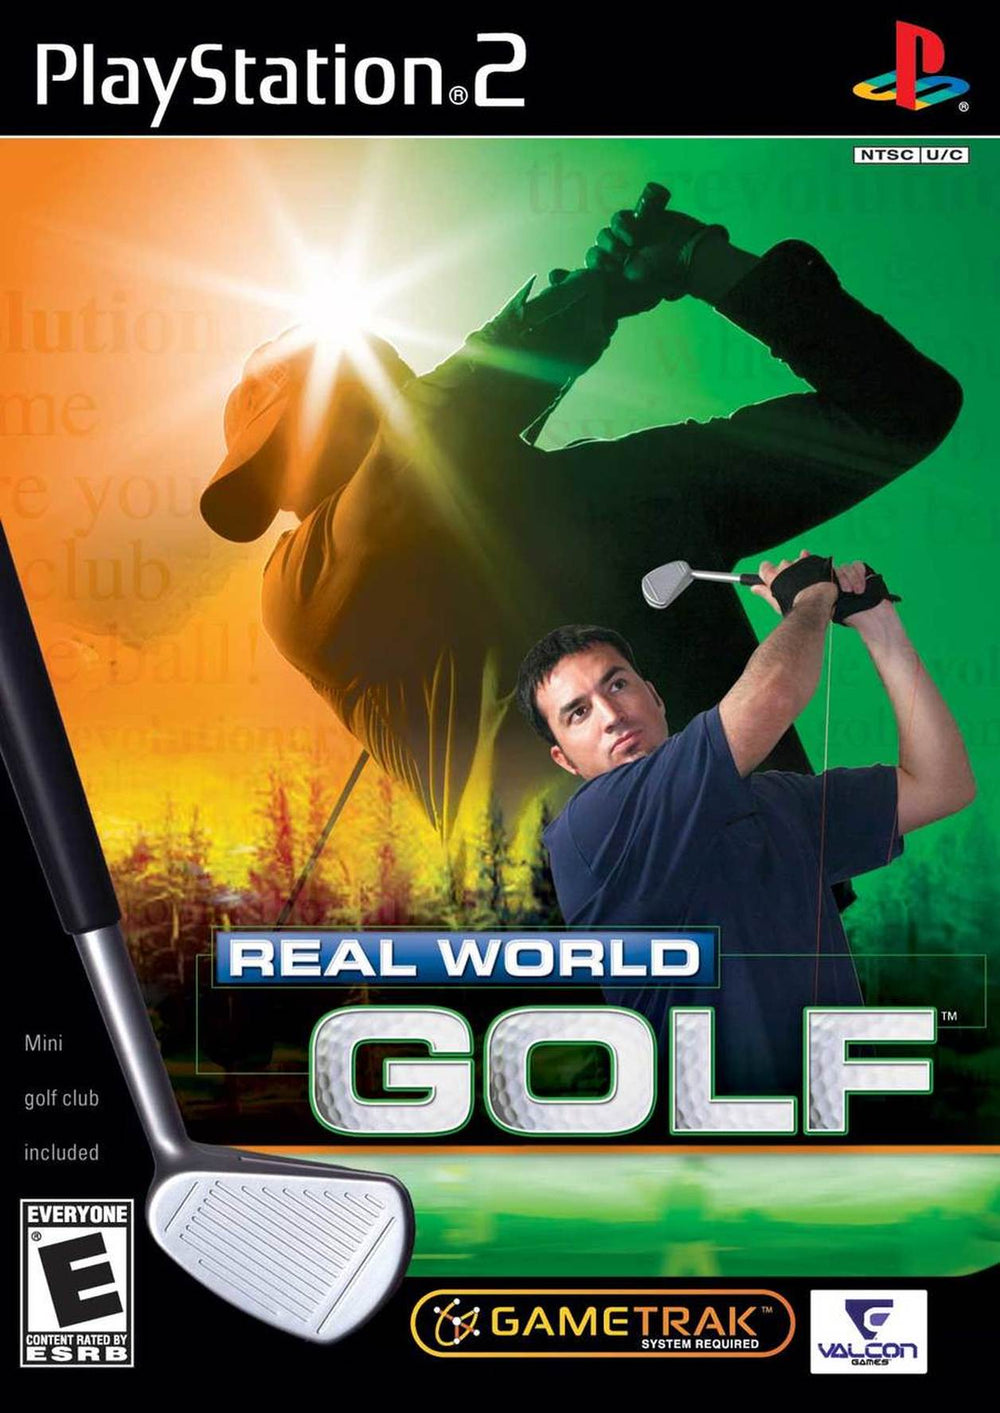 Playstation 2 - Real World Golf